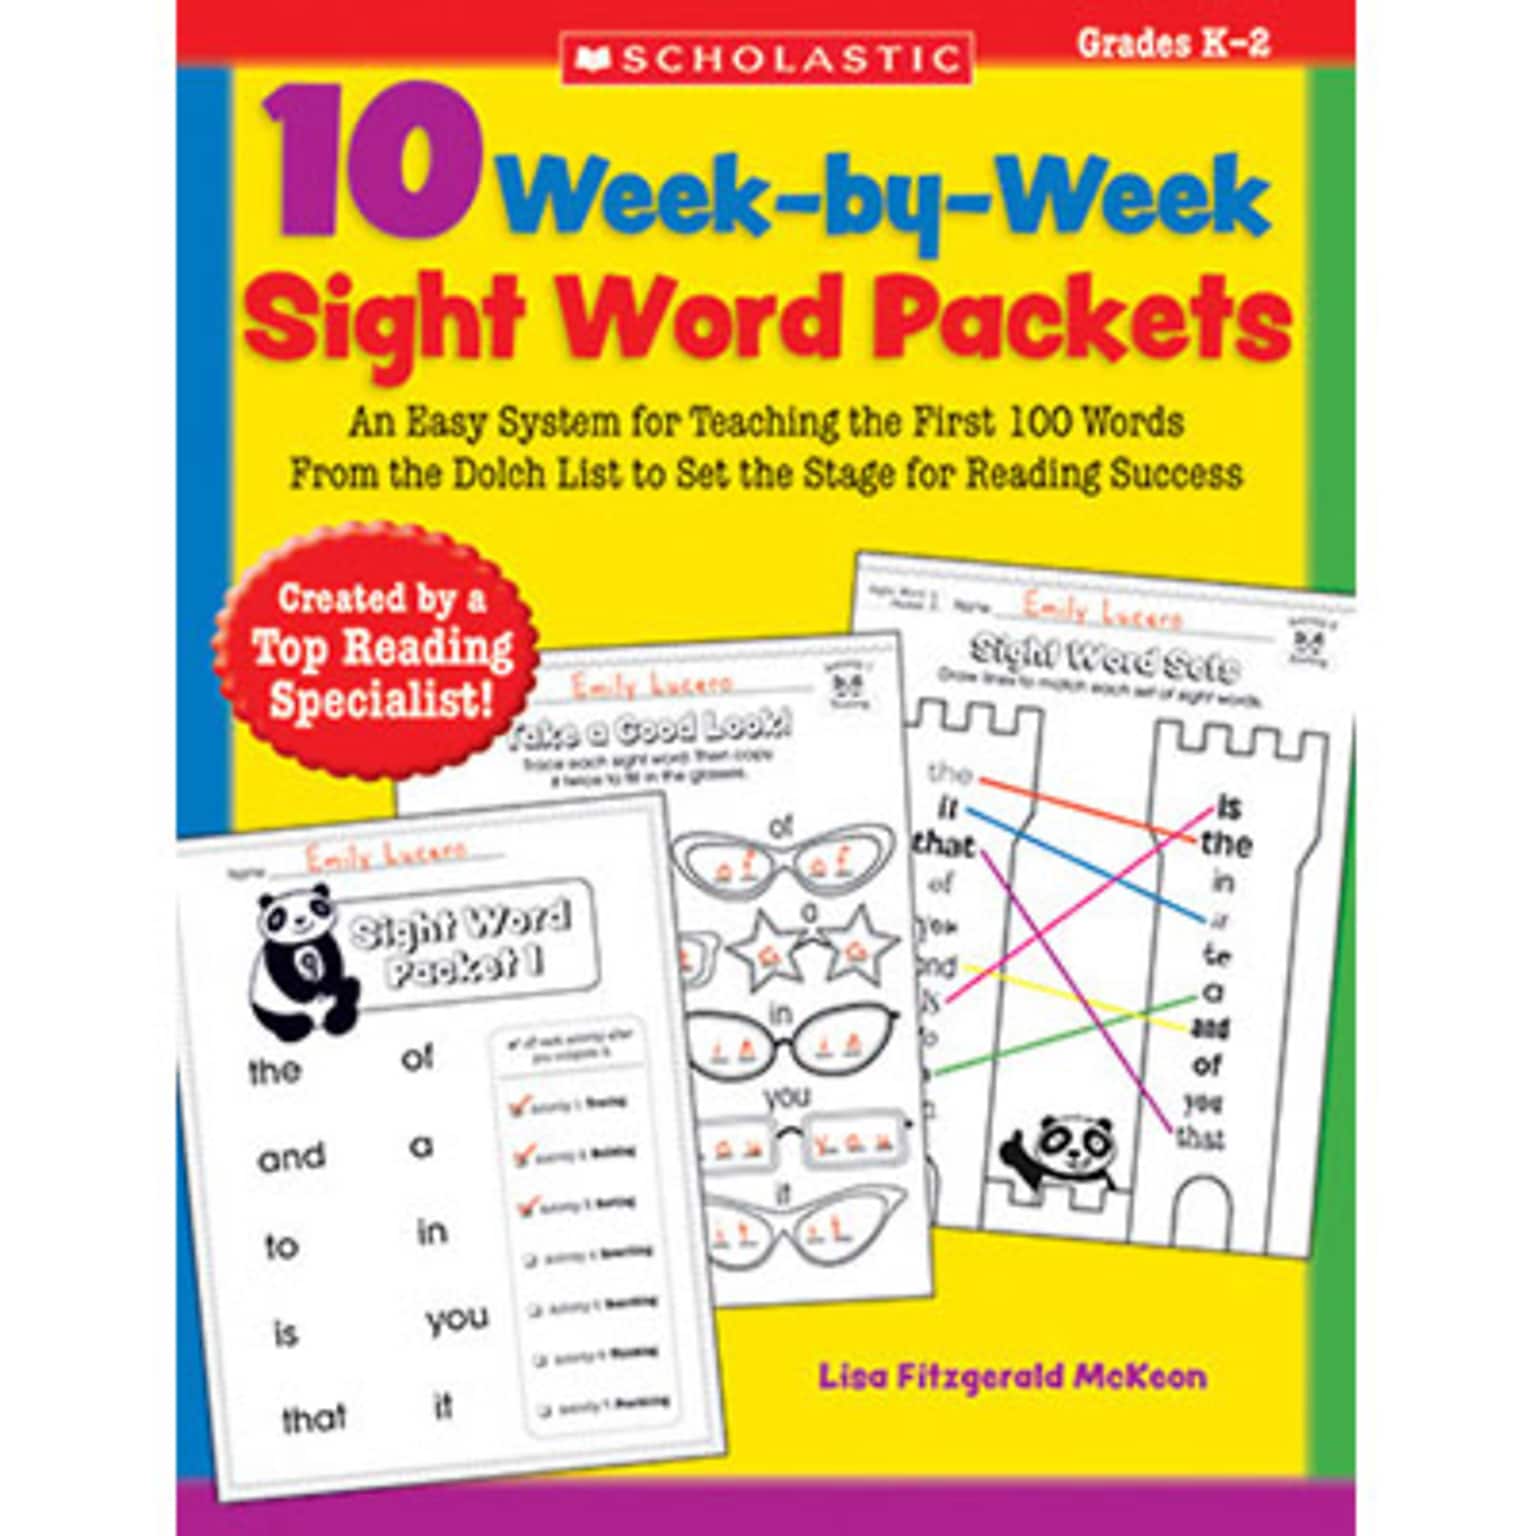 Scholastic 10 Week-By-Week Sight Word Packets, Grades K-2